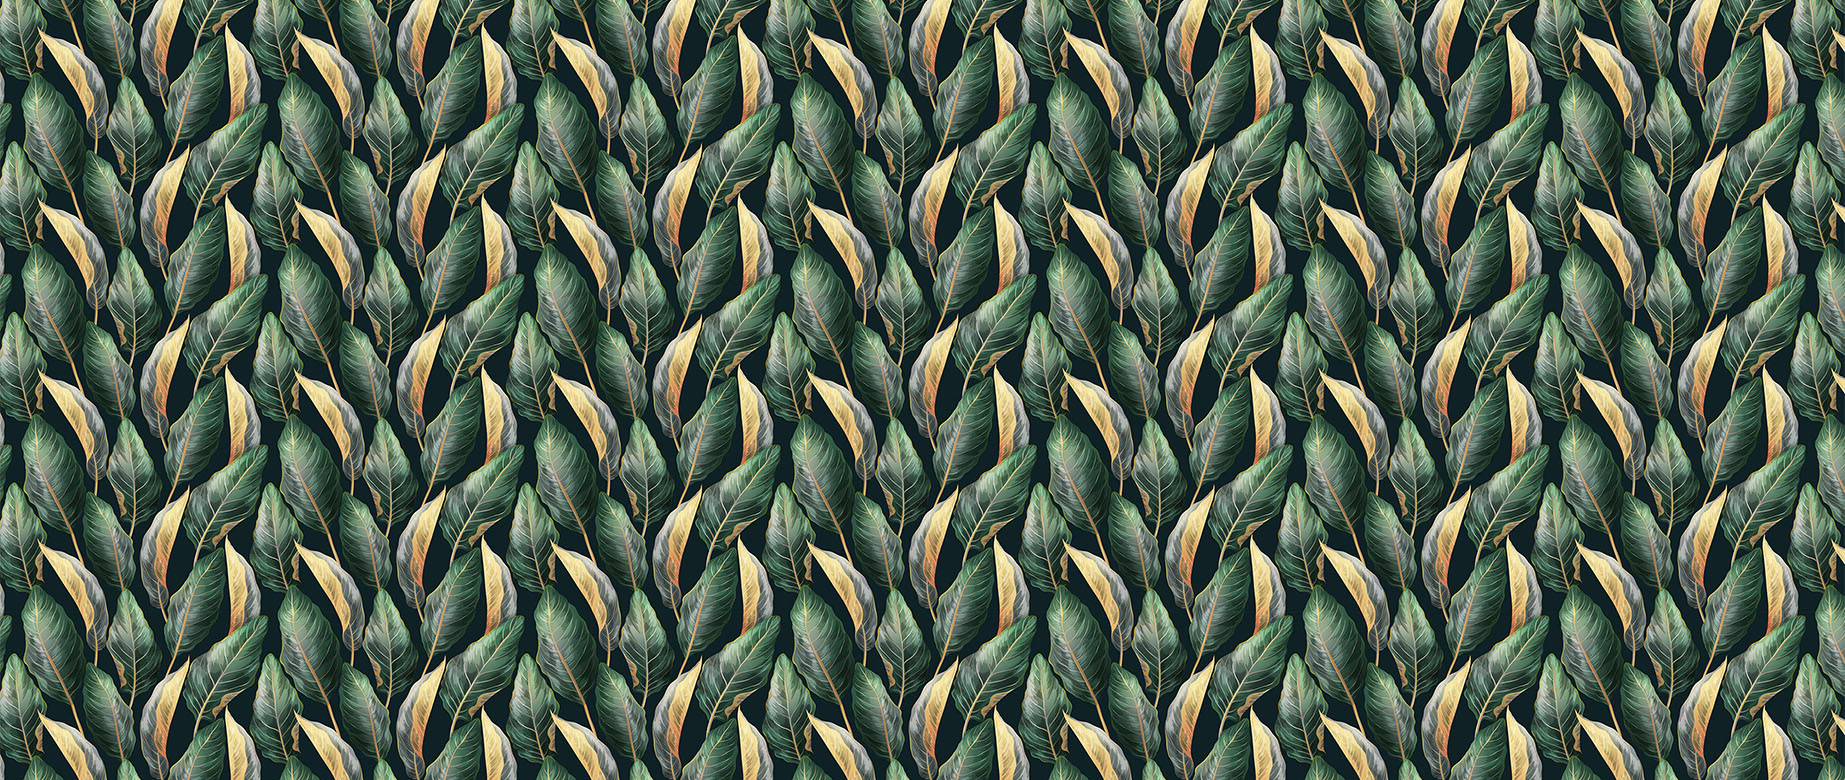 golden-green-leaves-in-dark-background-wallpaper-wide-view